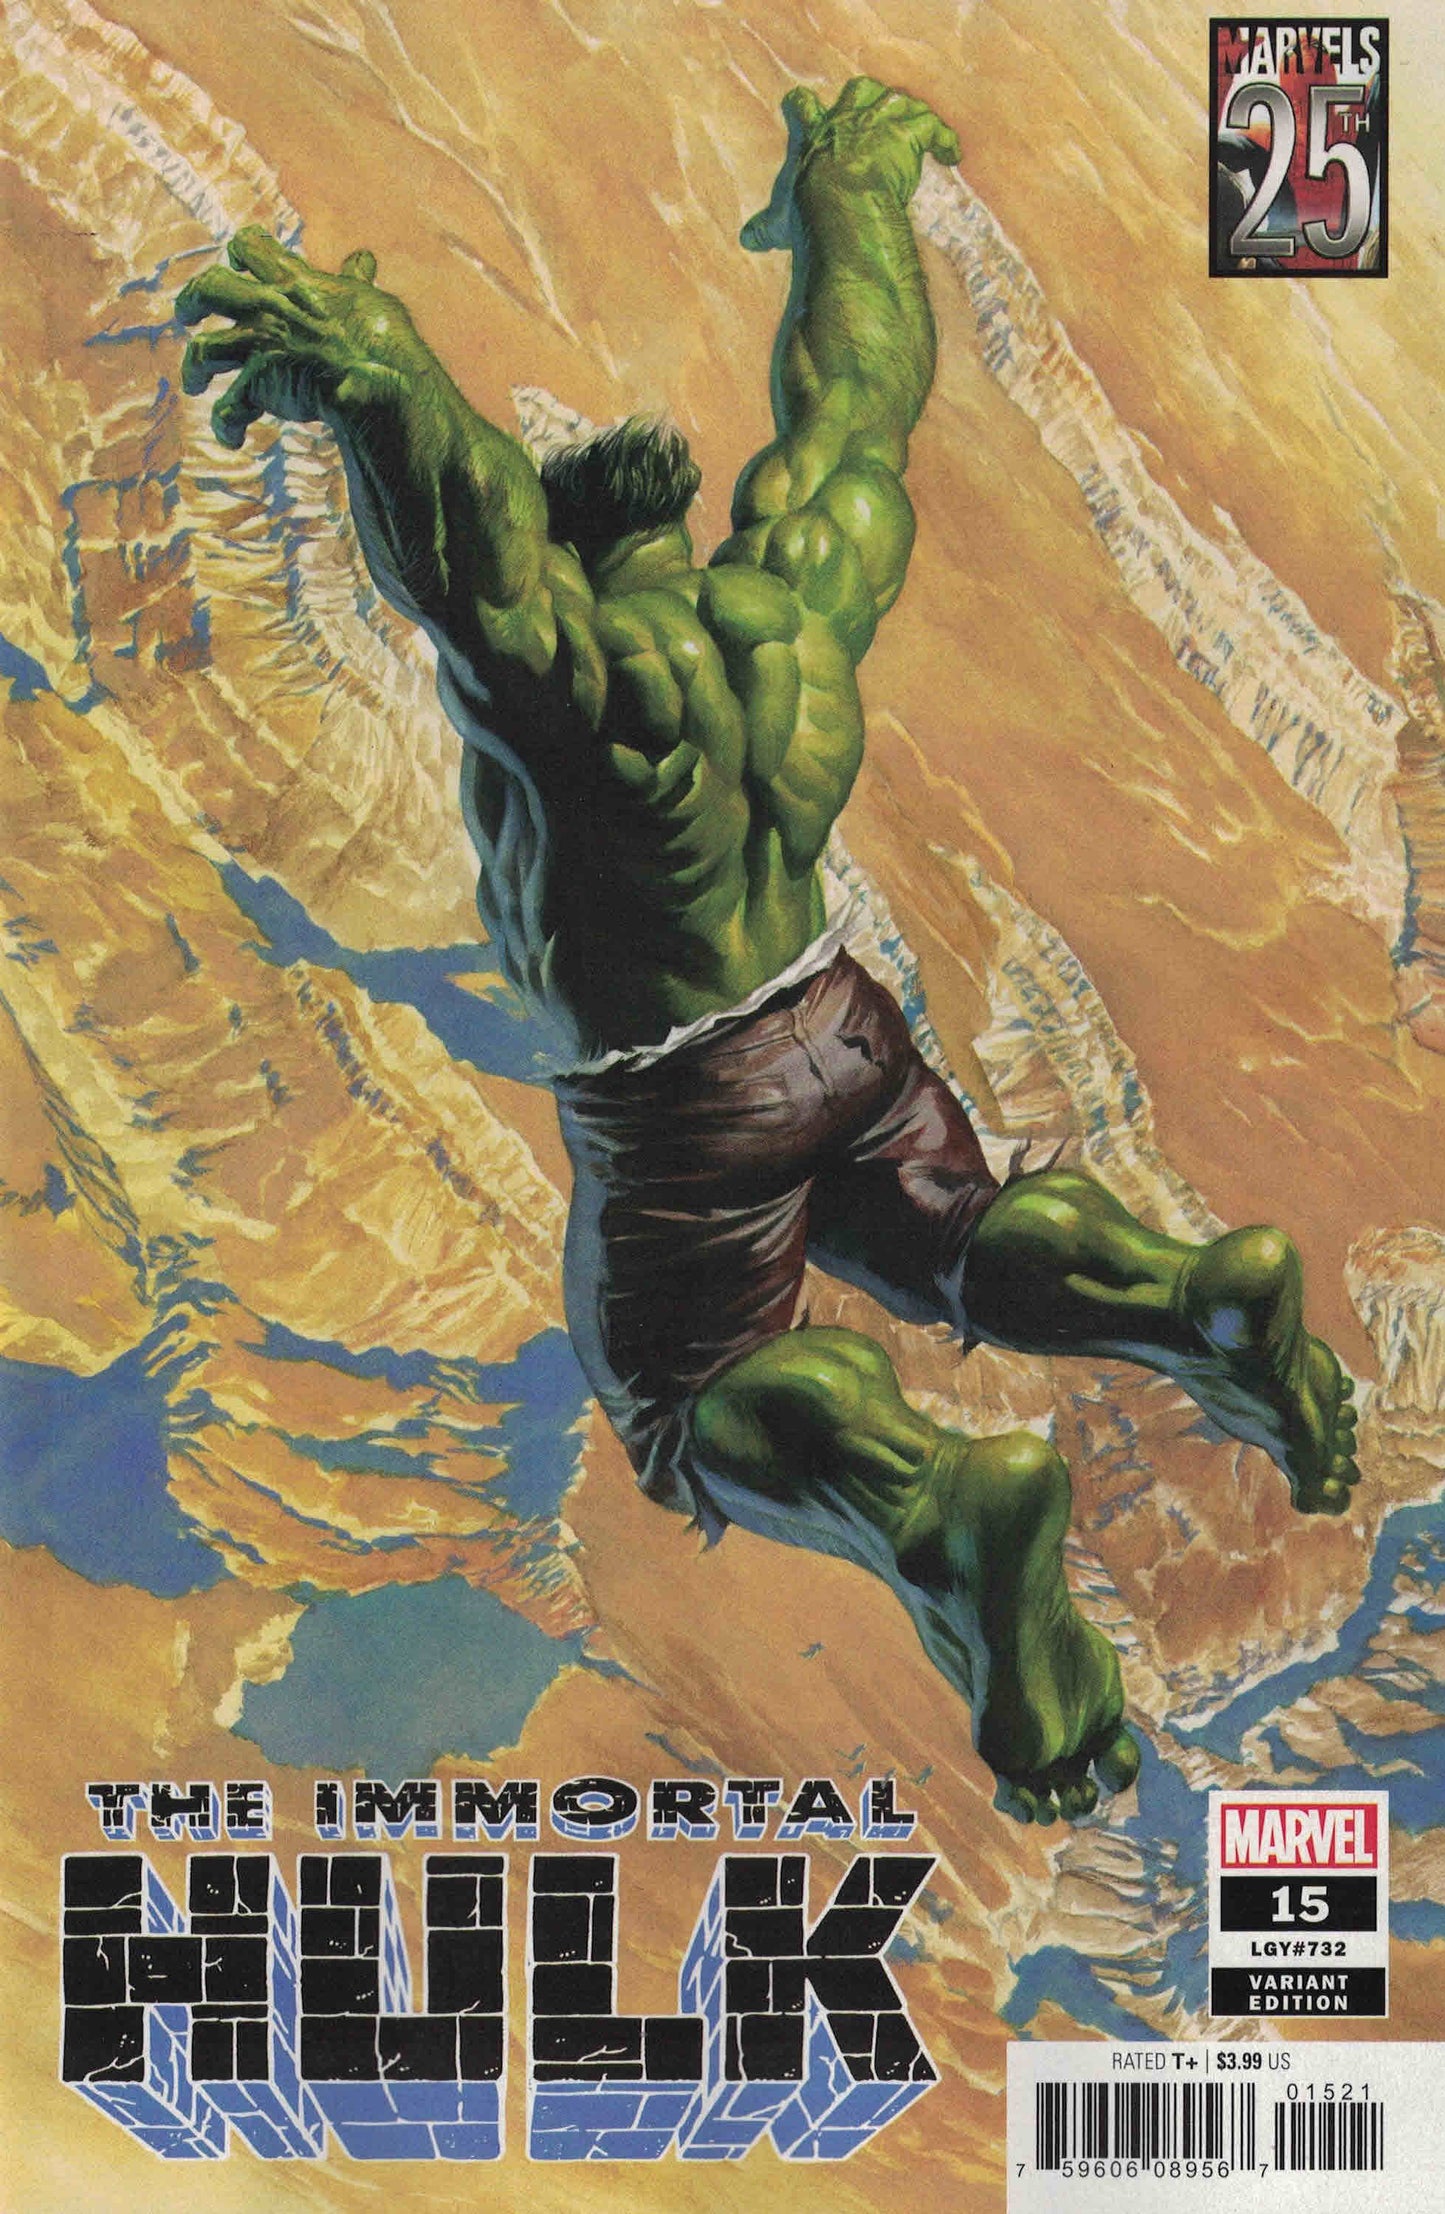 Couverture Immortel Hulk #15 B